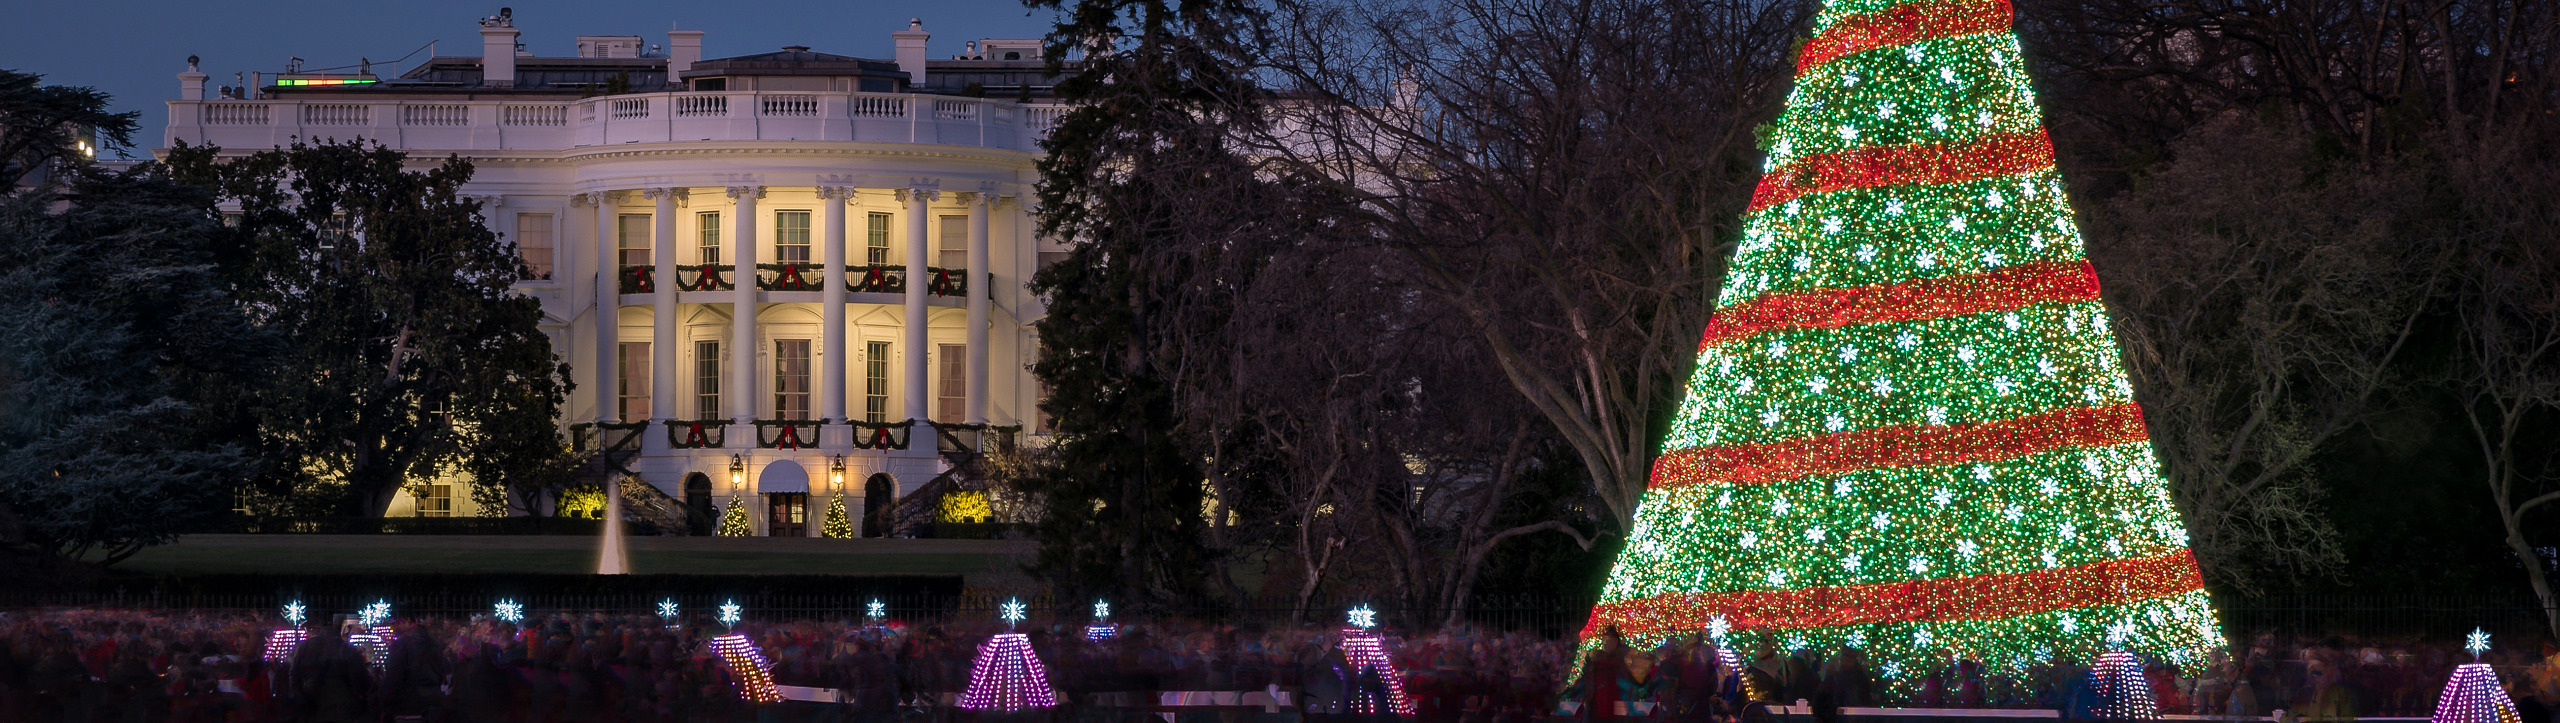 10 Enchanting Christmas Day Trips in Washington, D.C.